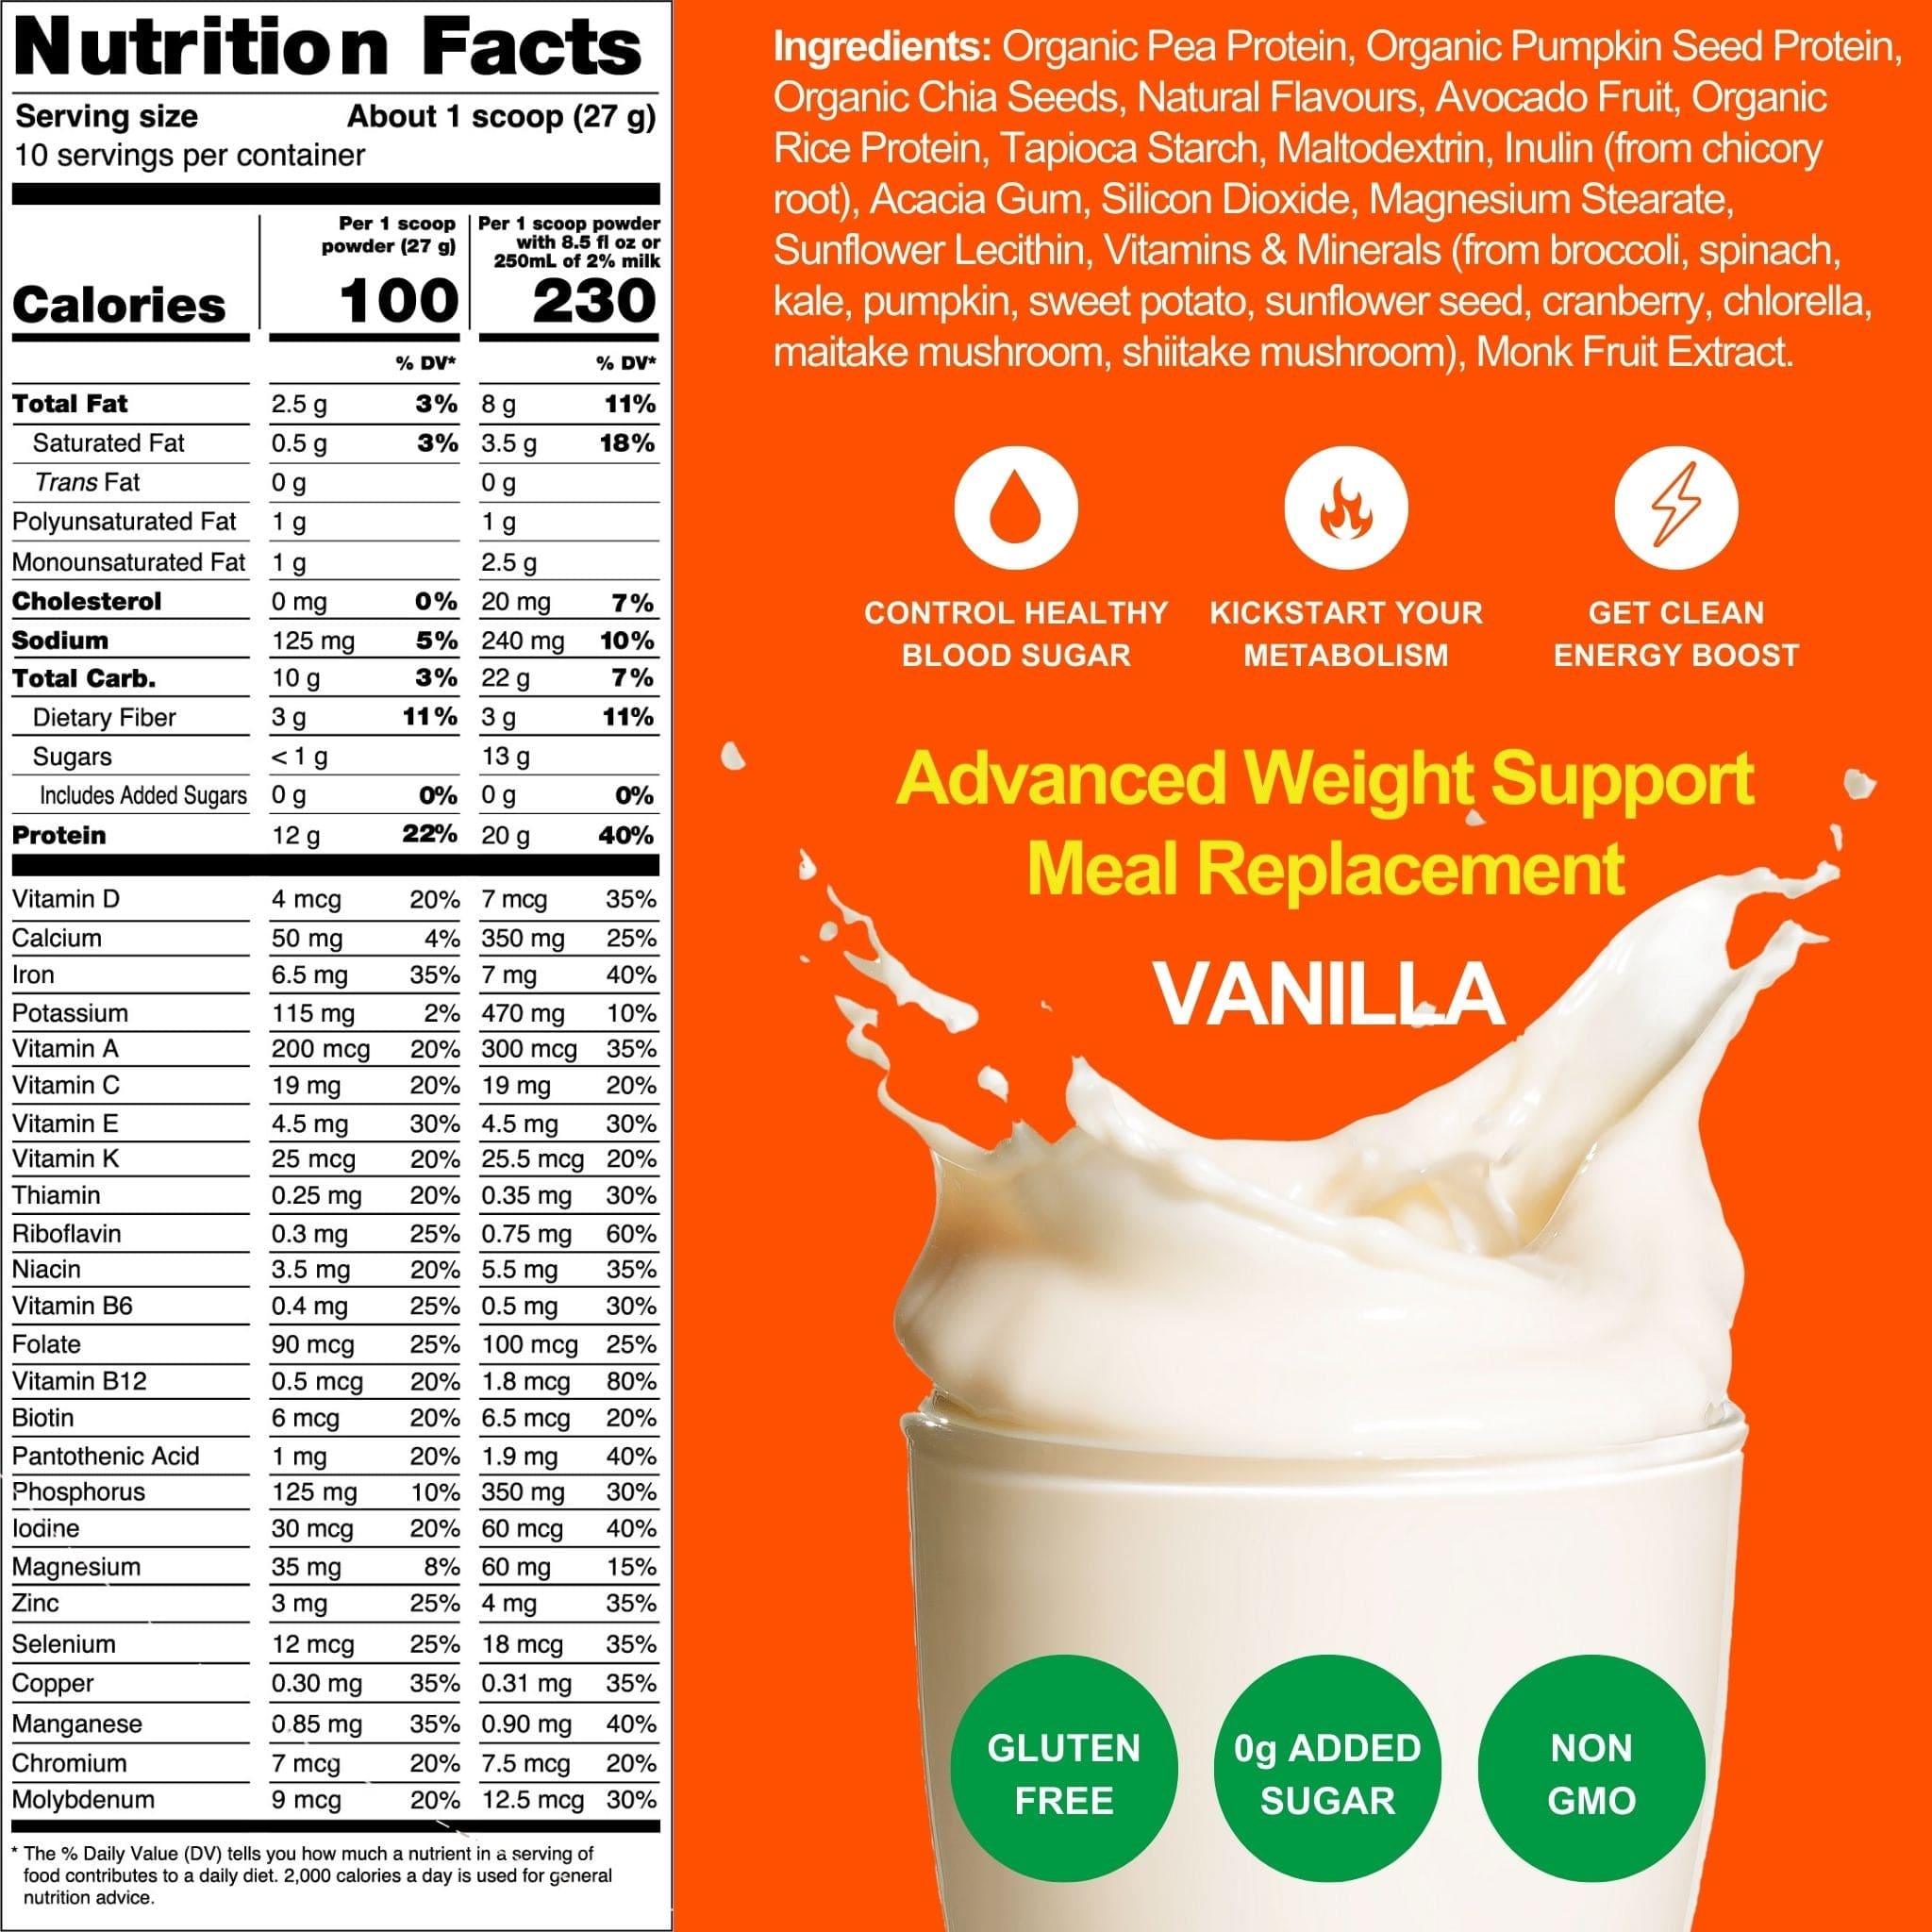 Metavo US Metavo Metavo Advanced Weight Support Meal Replacement Vanilla